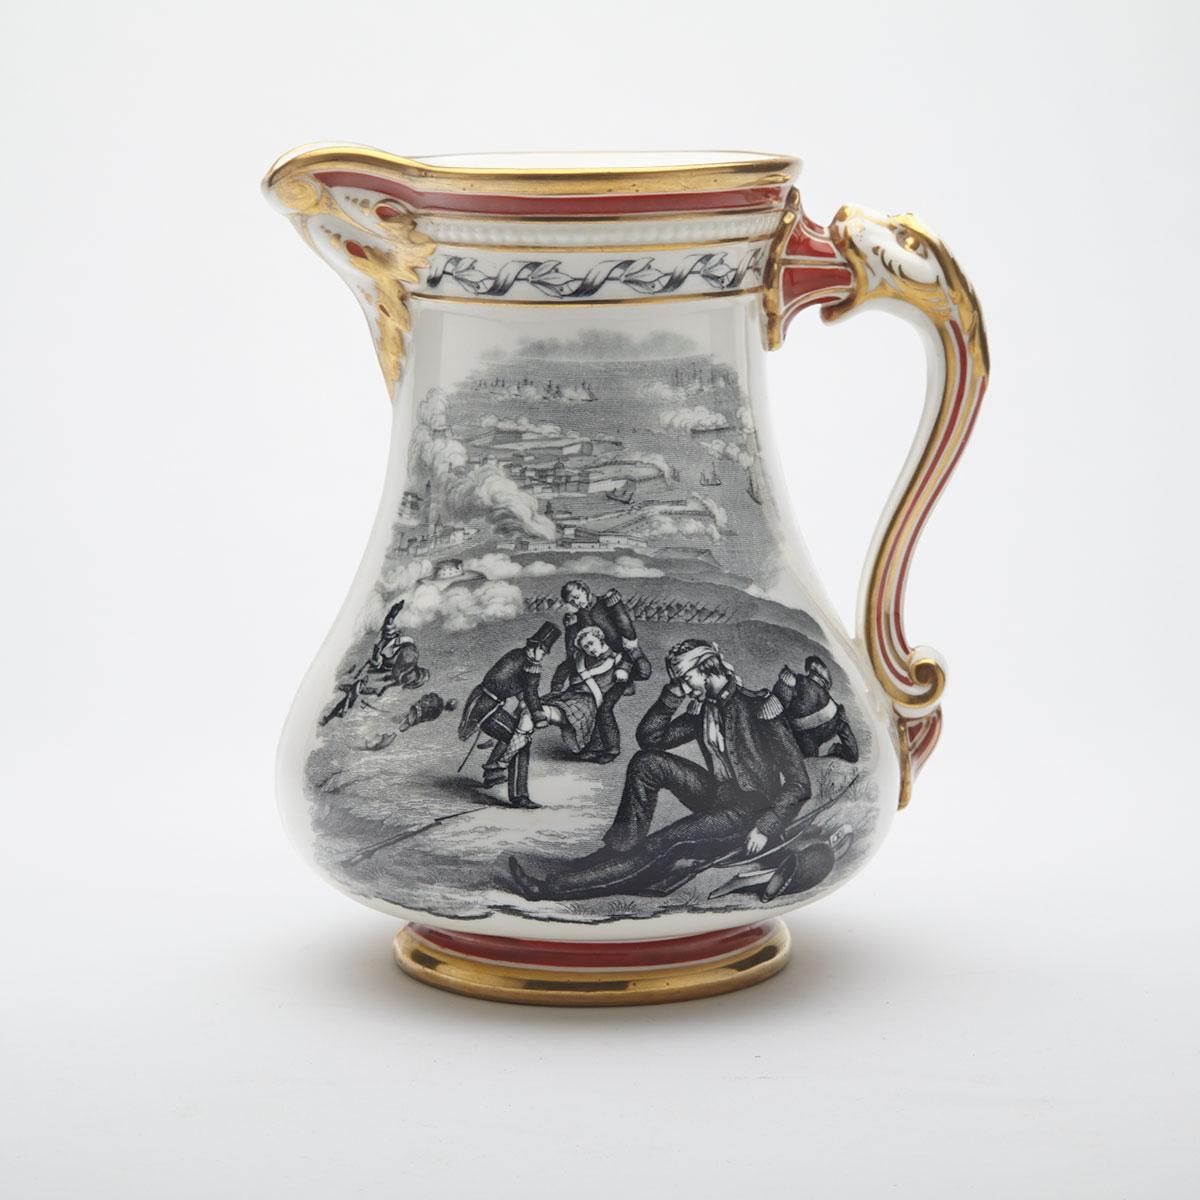 Stoneware ‘Royal Patriotic Jug’, Samuel Alcock & Co. Hill Pottery, Burslem, c.1855